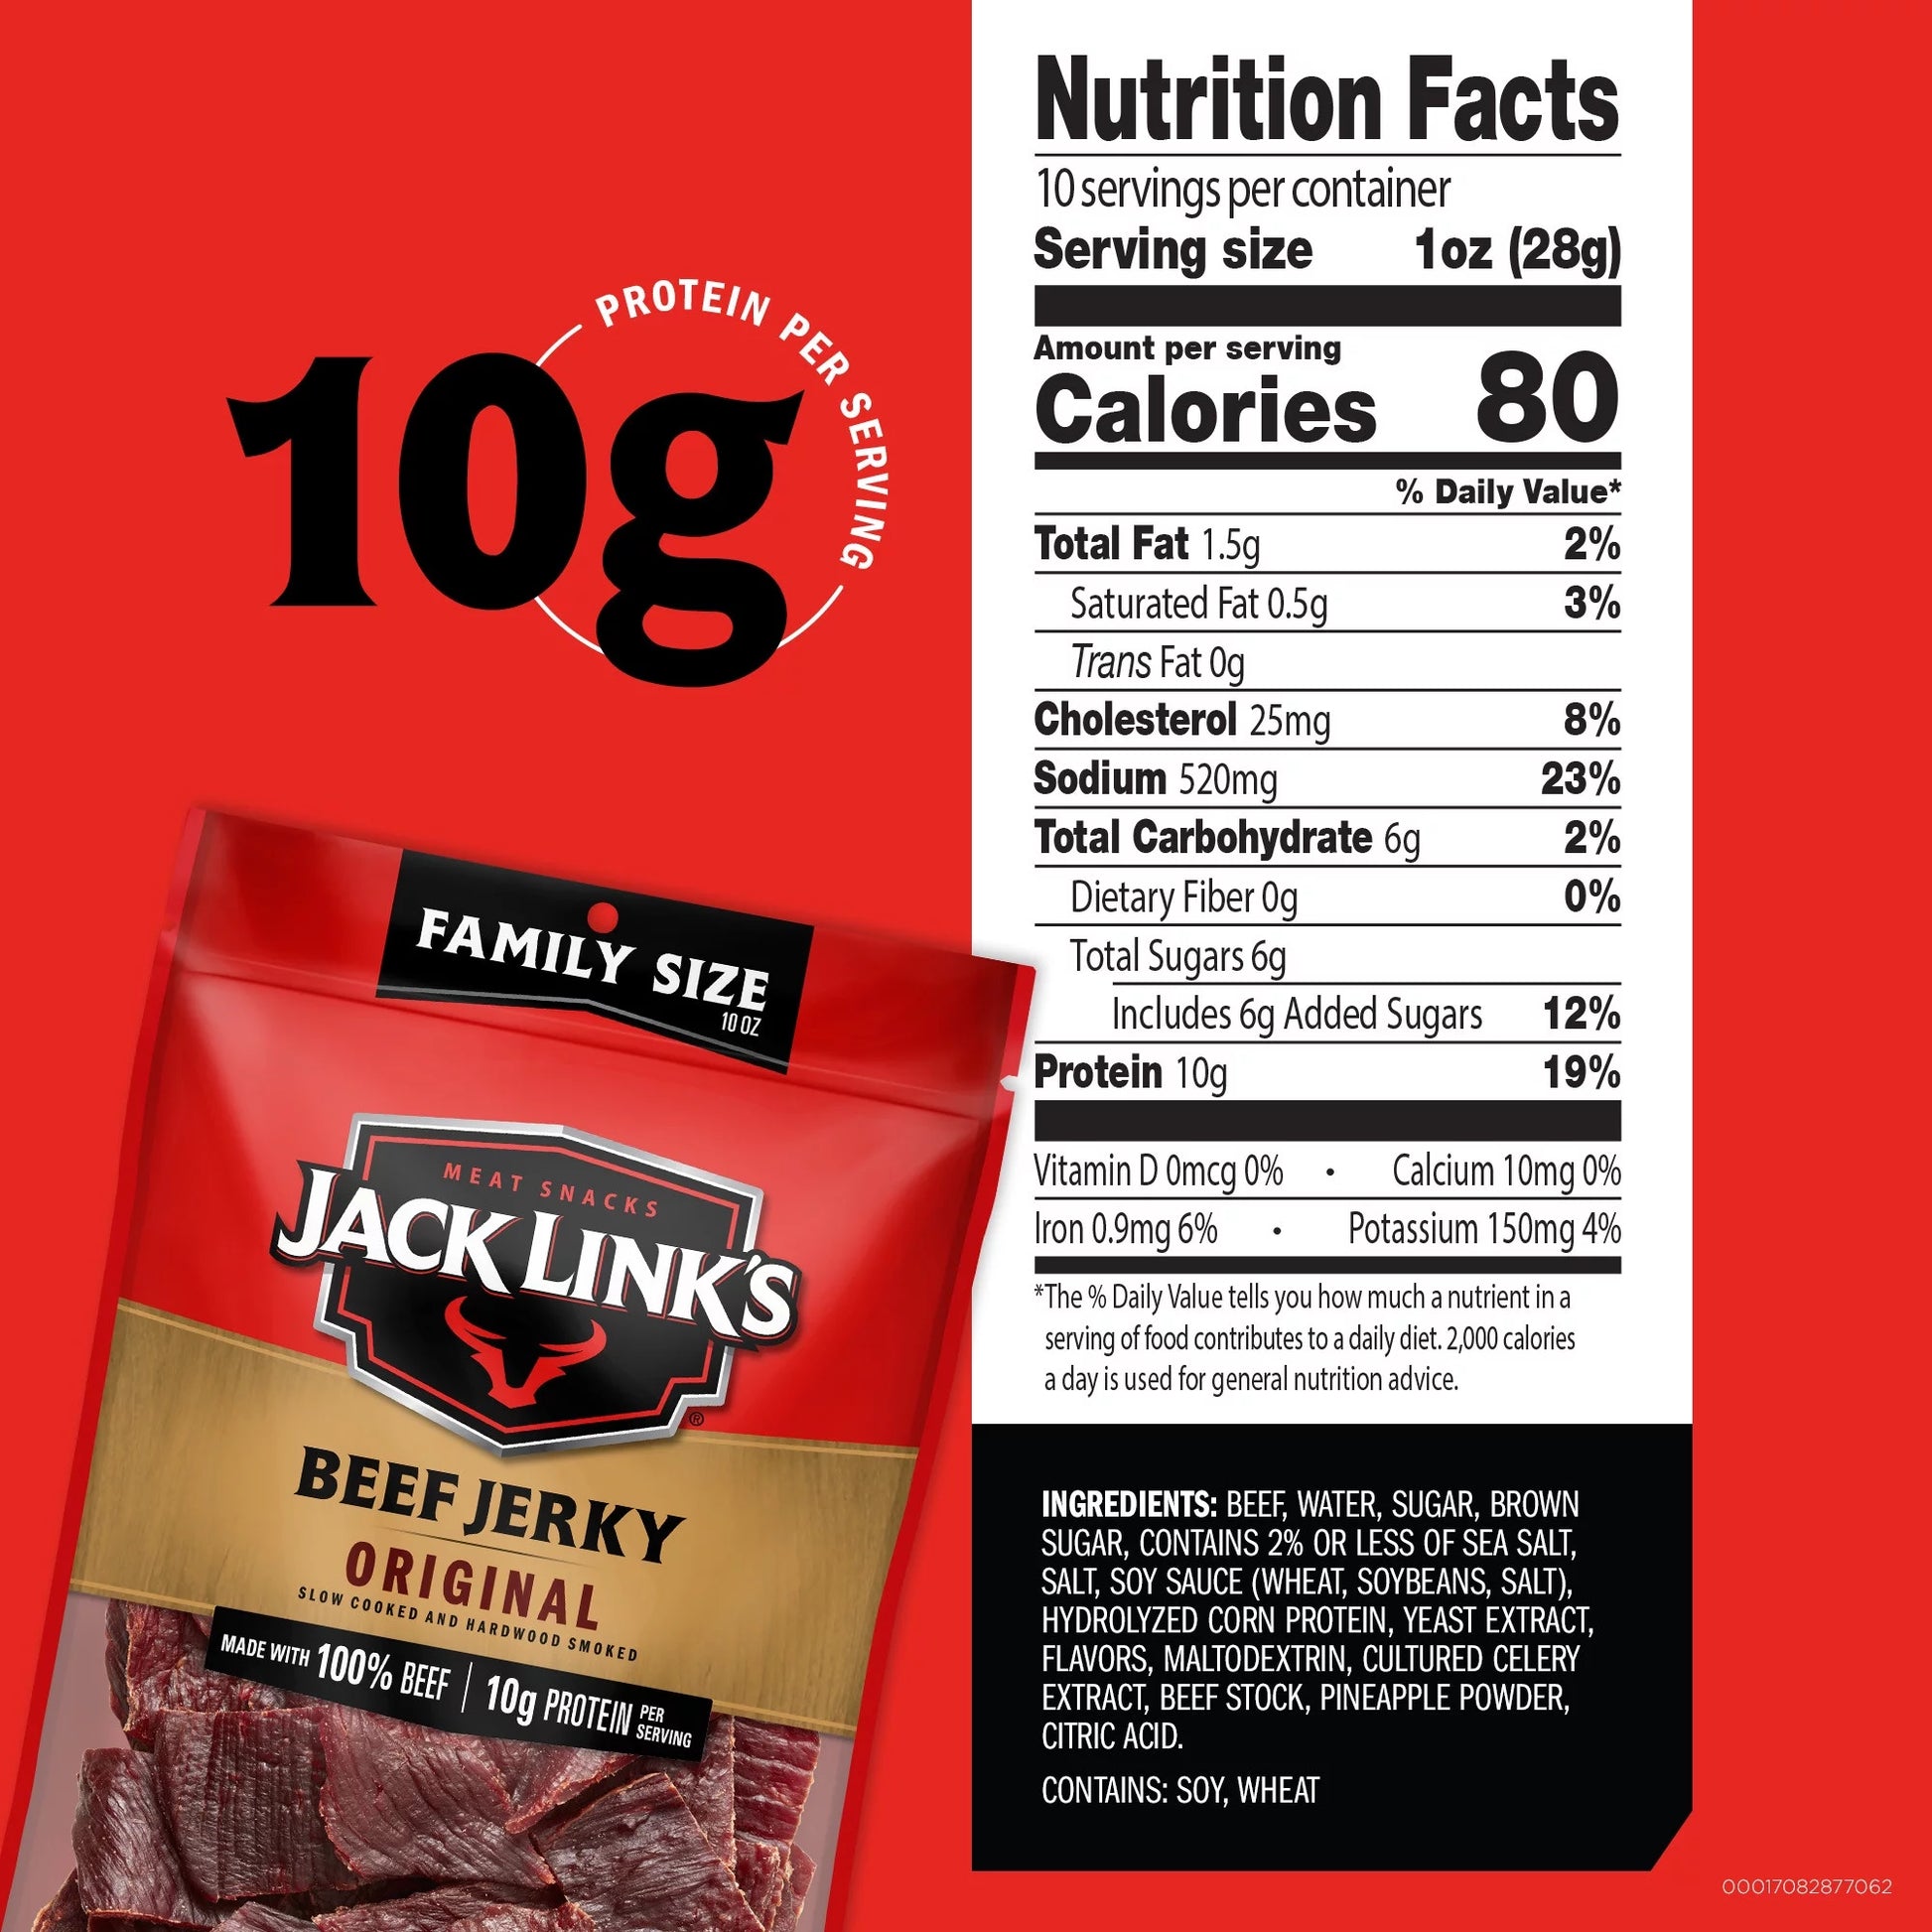 (2 Pack) Jack Link’S Beef Jerky, 100% Beef, Original, 10G of Protein per Serving, 10 Oz Bag